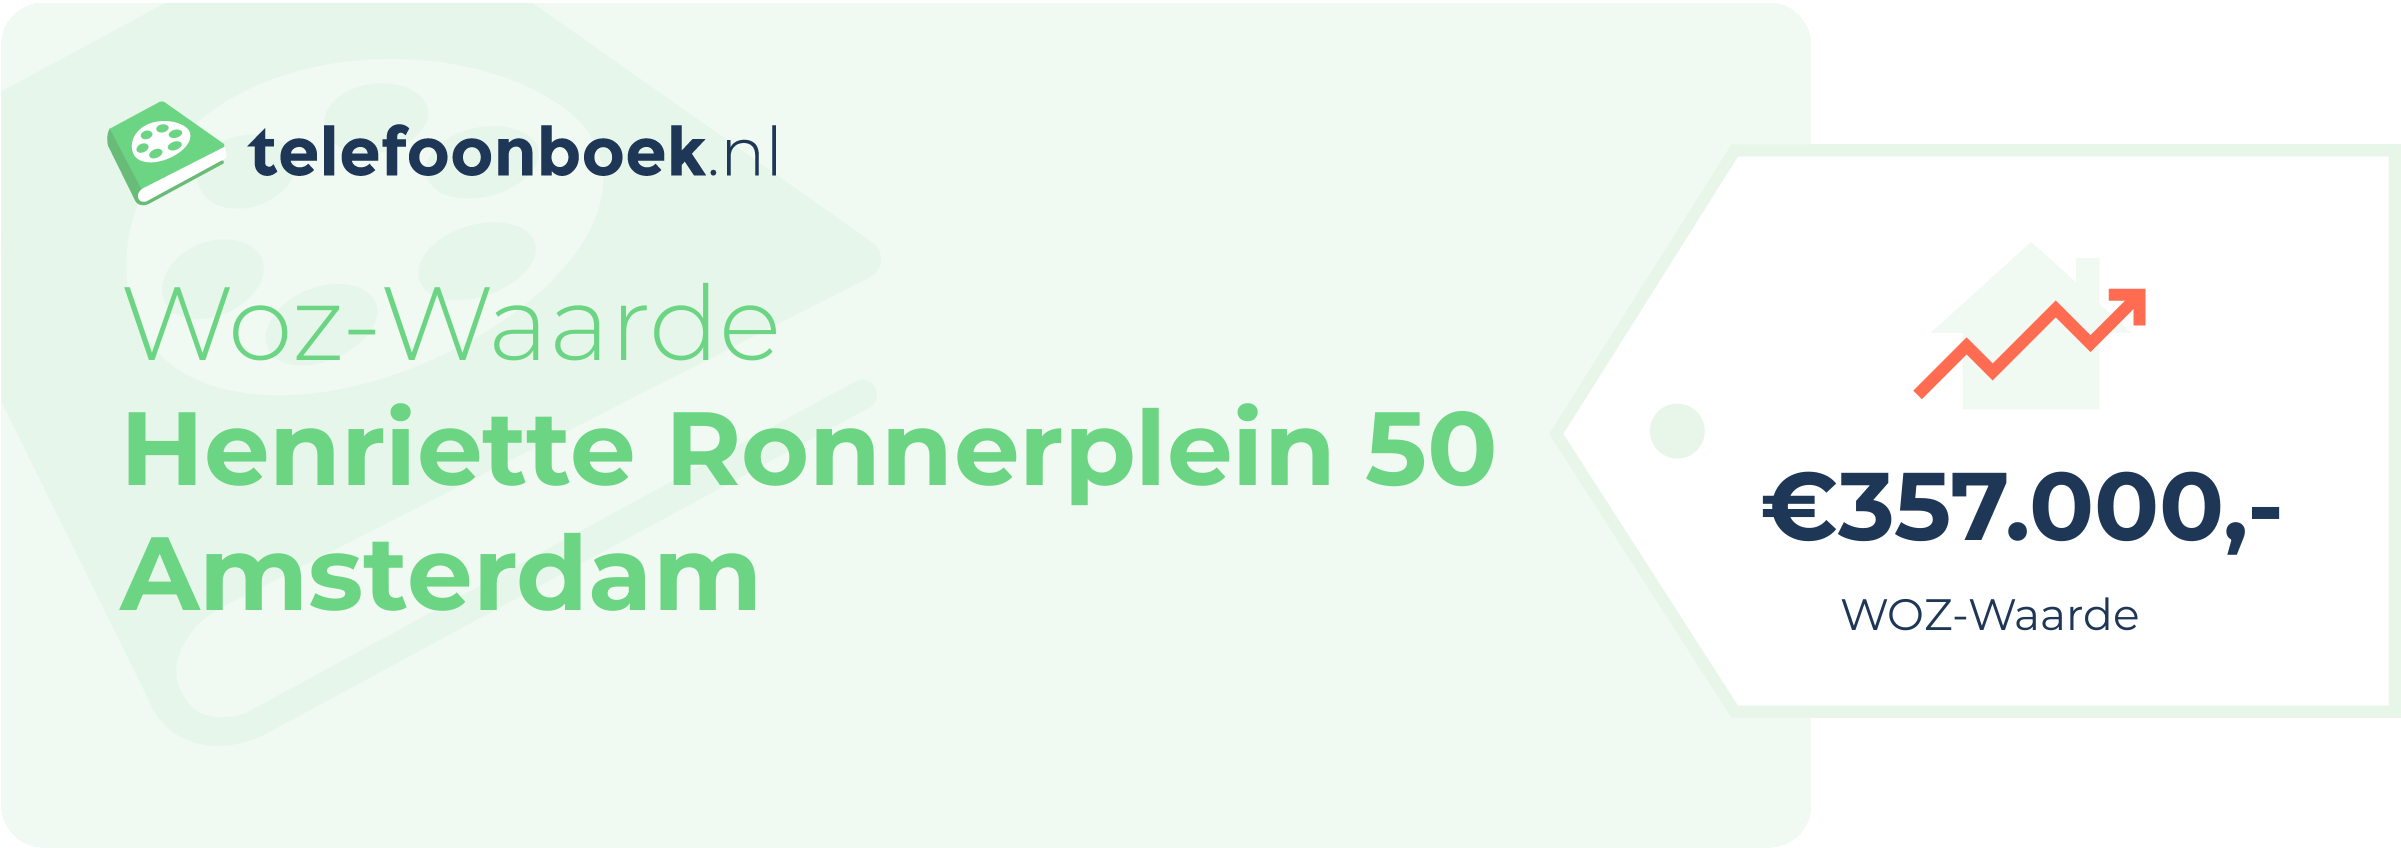 WOZ-waarde Henriette Ronnerplein 50 Amsterdam